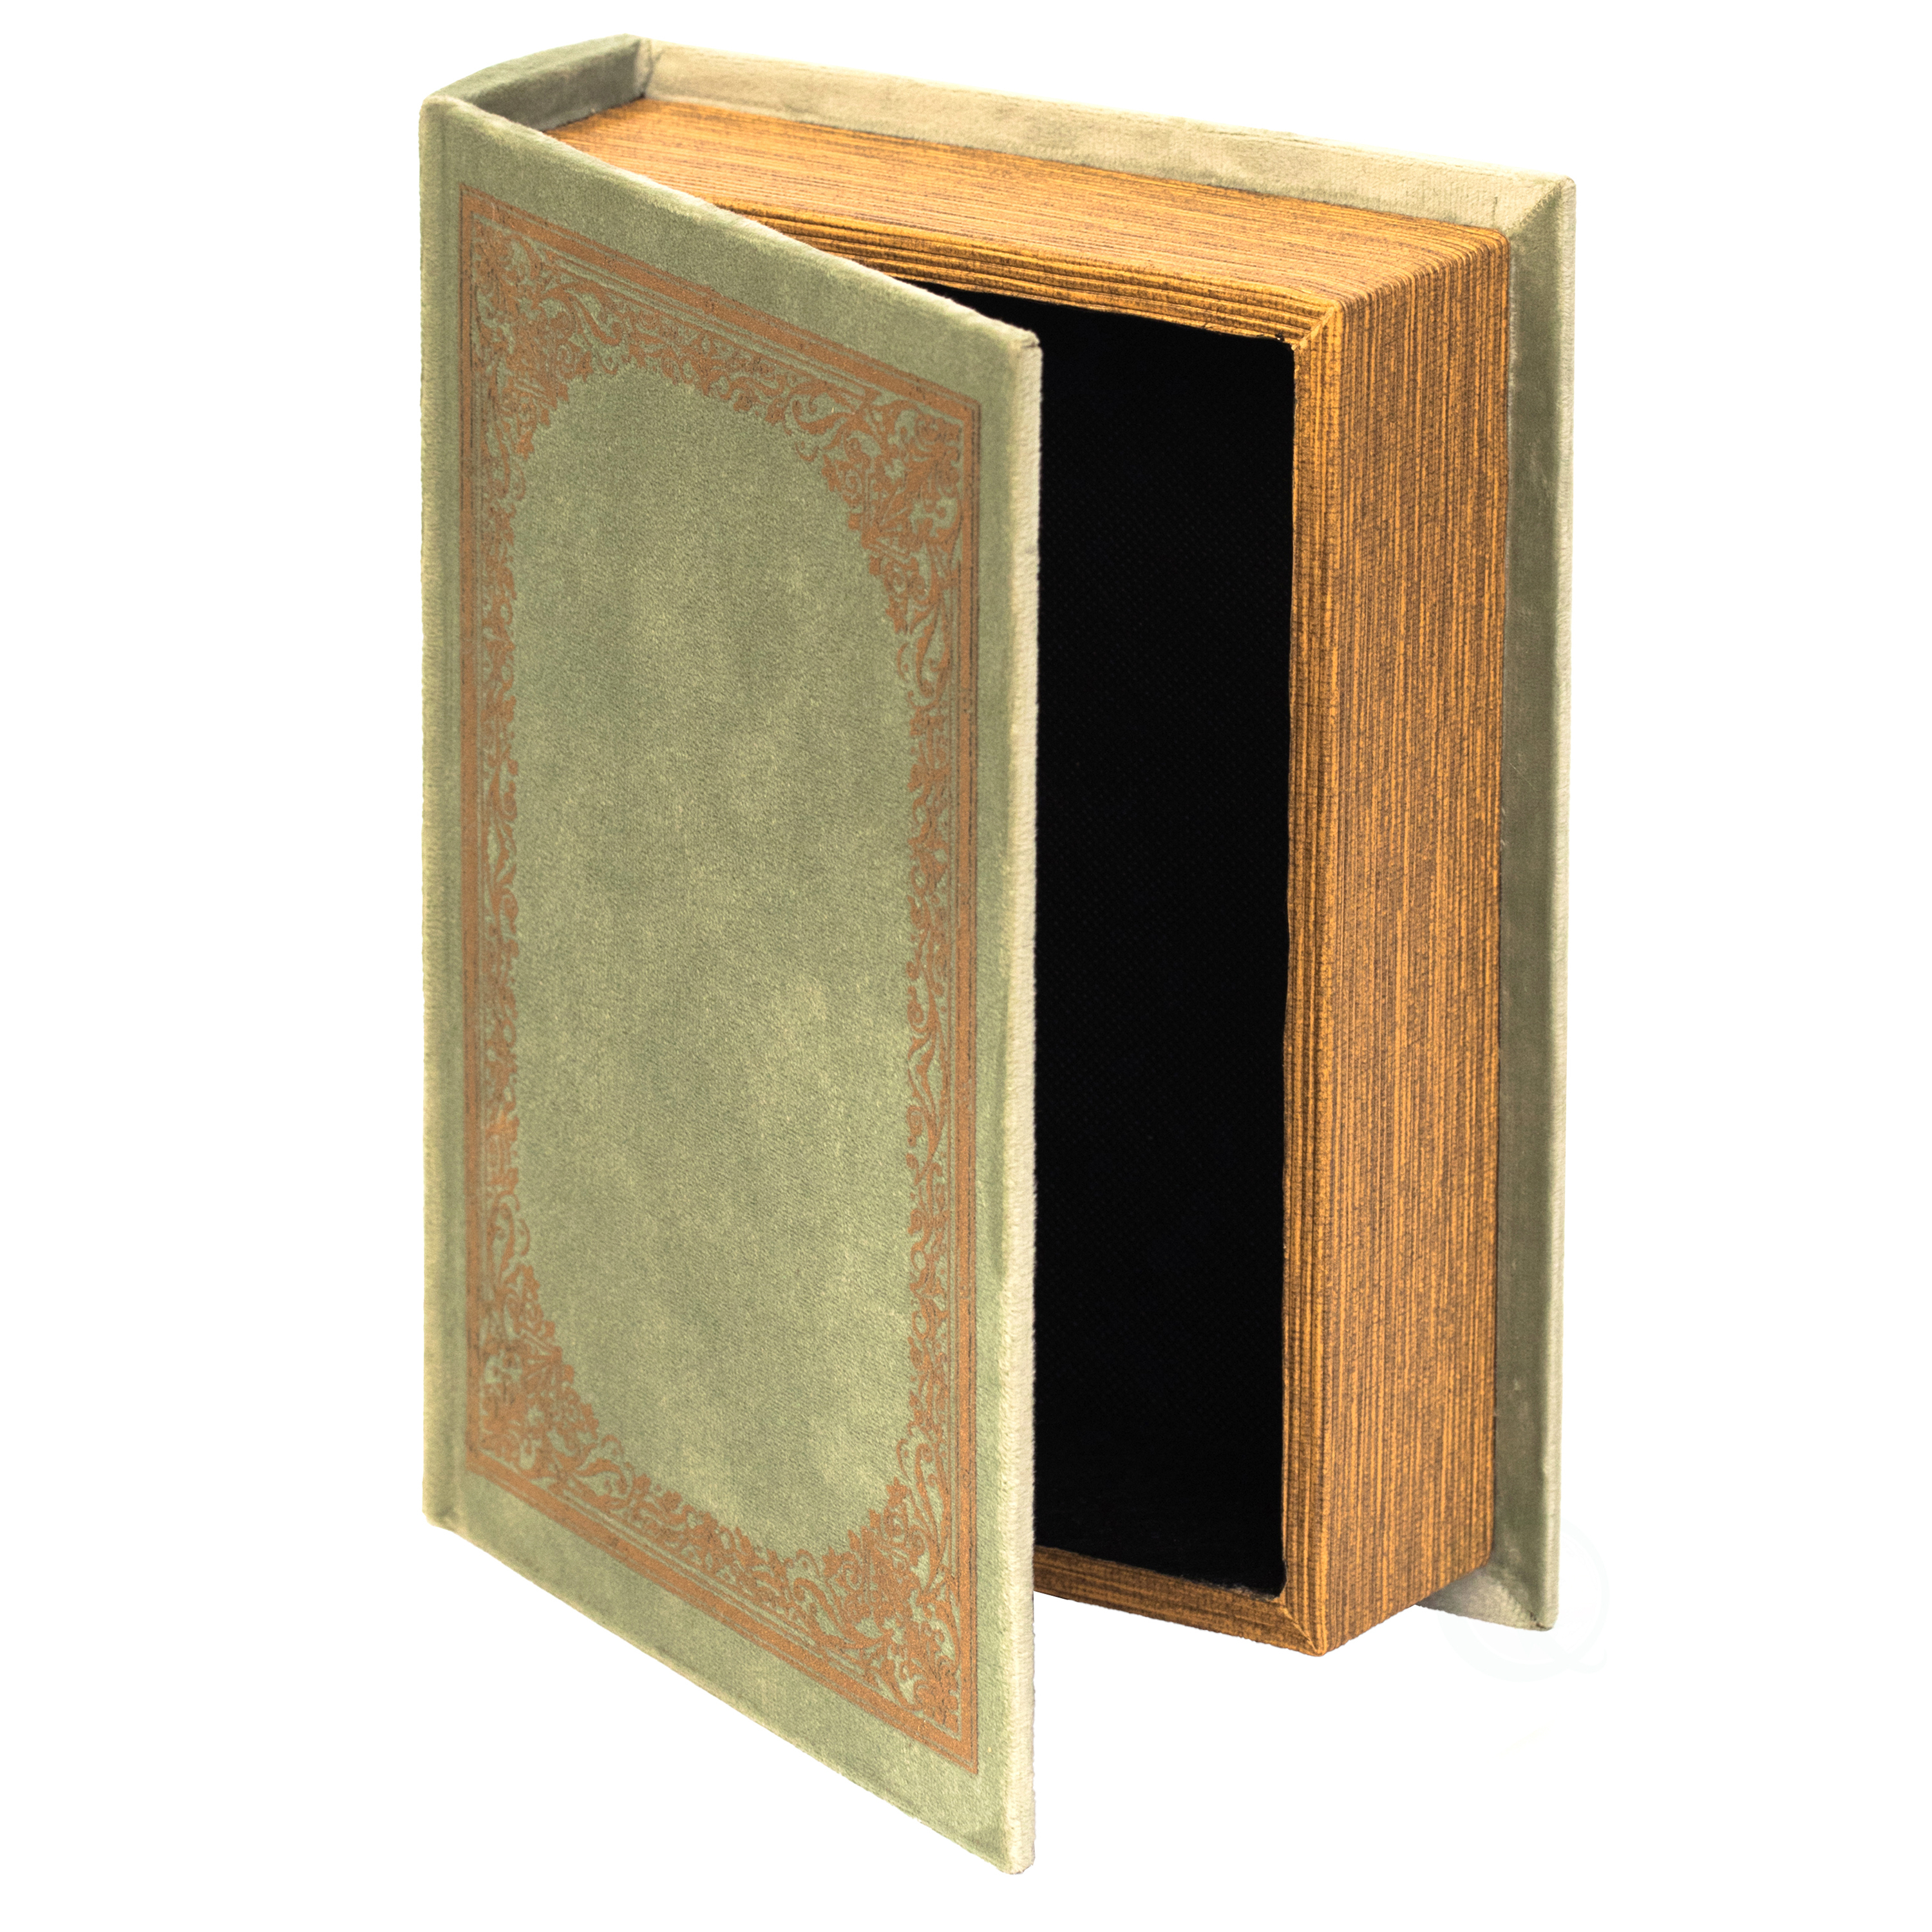 Decorative Vintage Book Shaped Trinket Storage Box - image 1 of 10